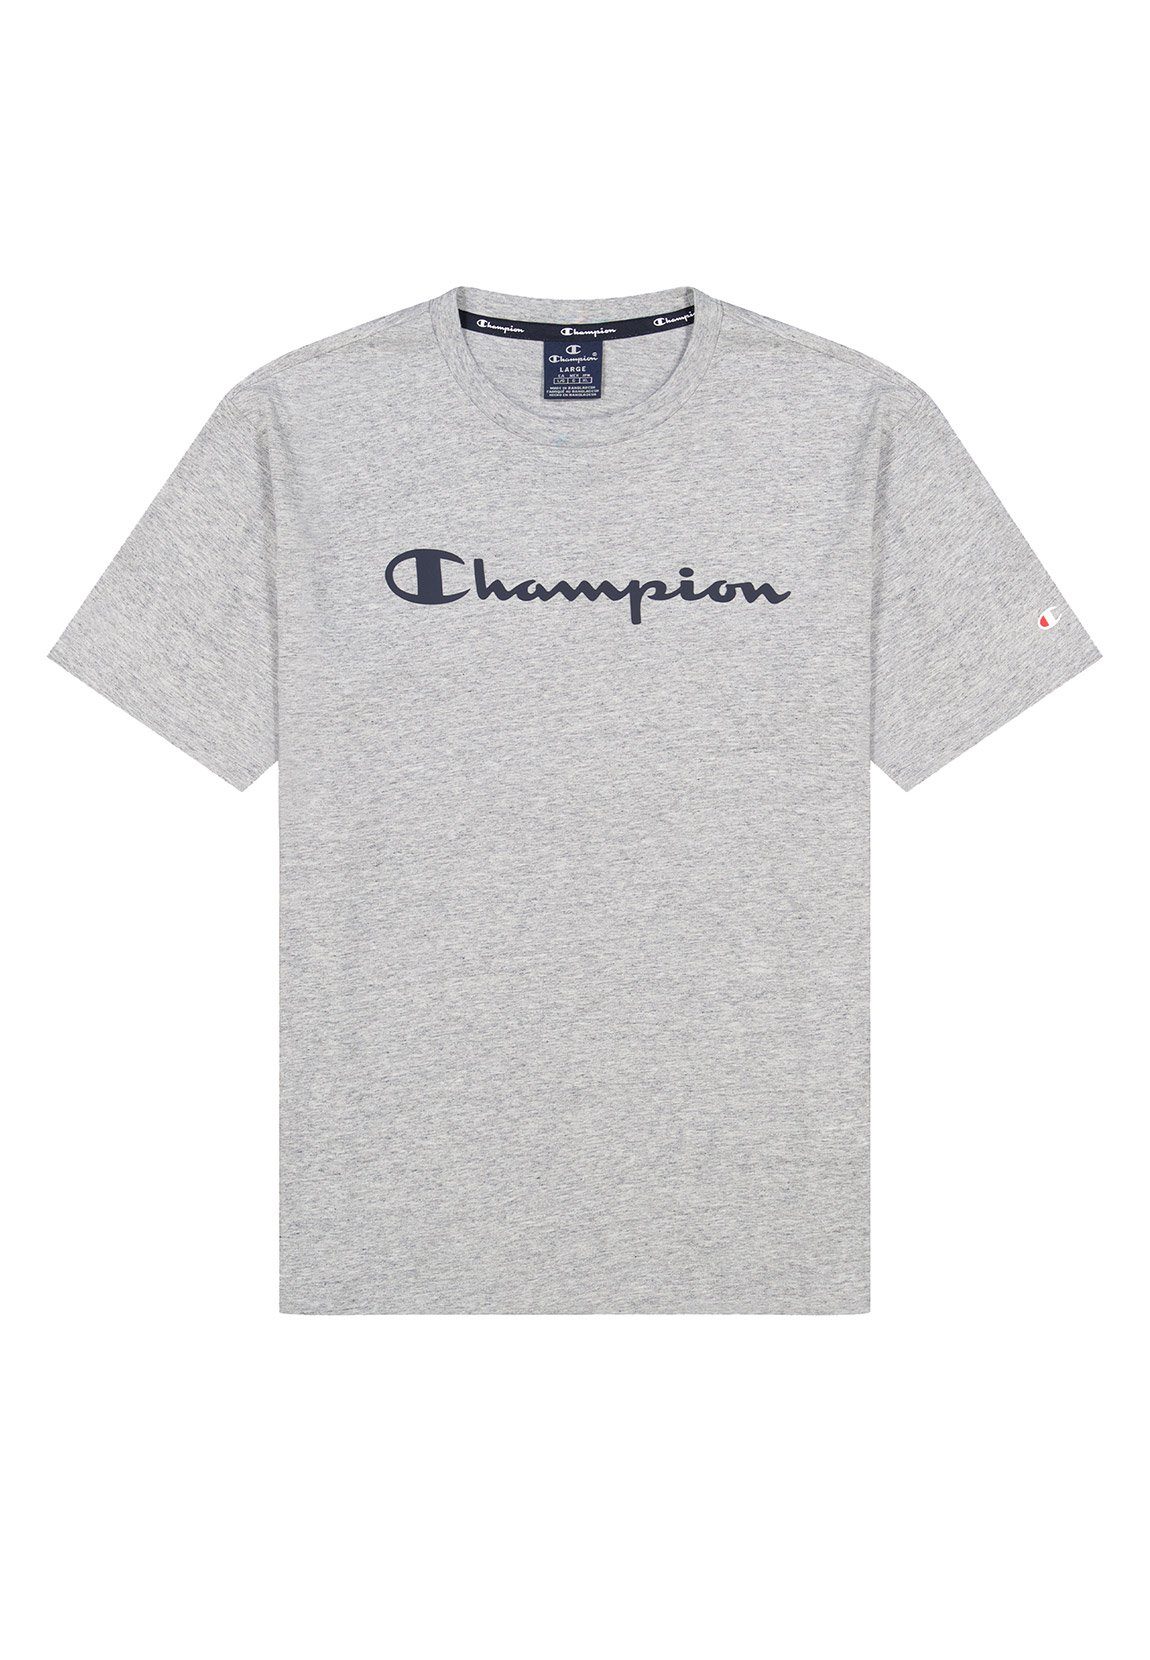 Champion T-Shirt Champion Herren T-Shirt 217146 EM021 NOXM Grau